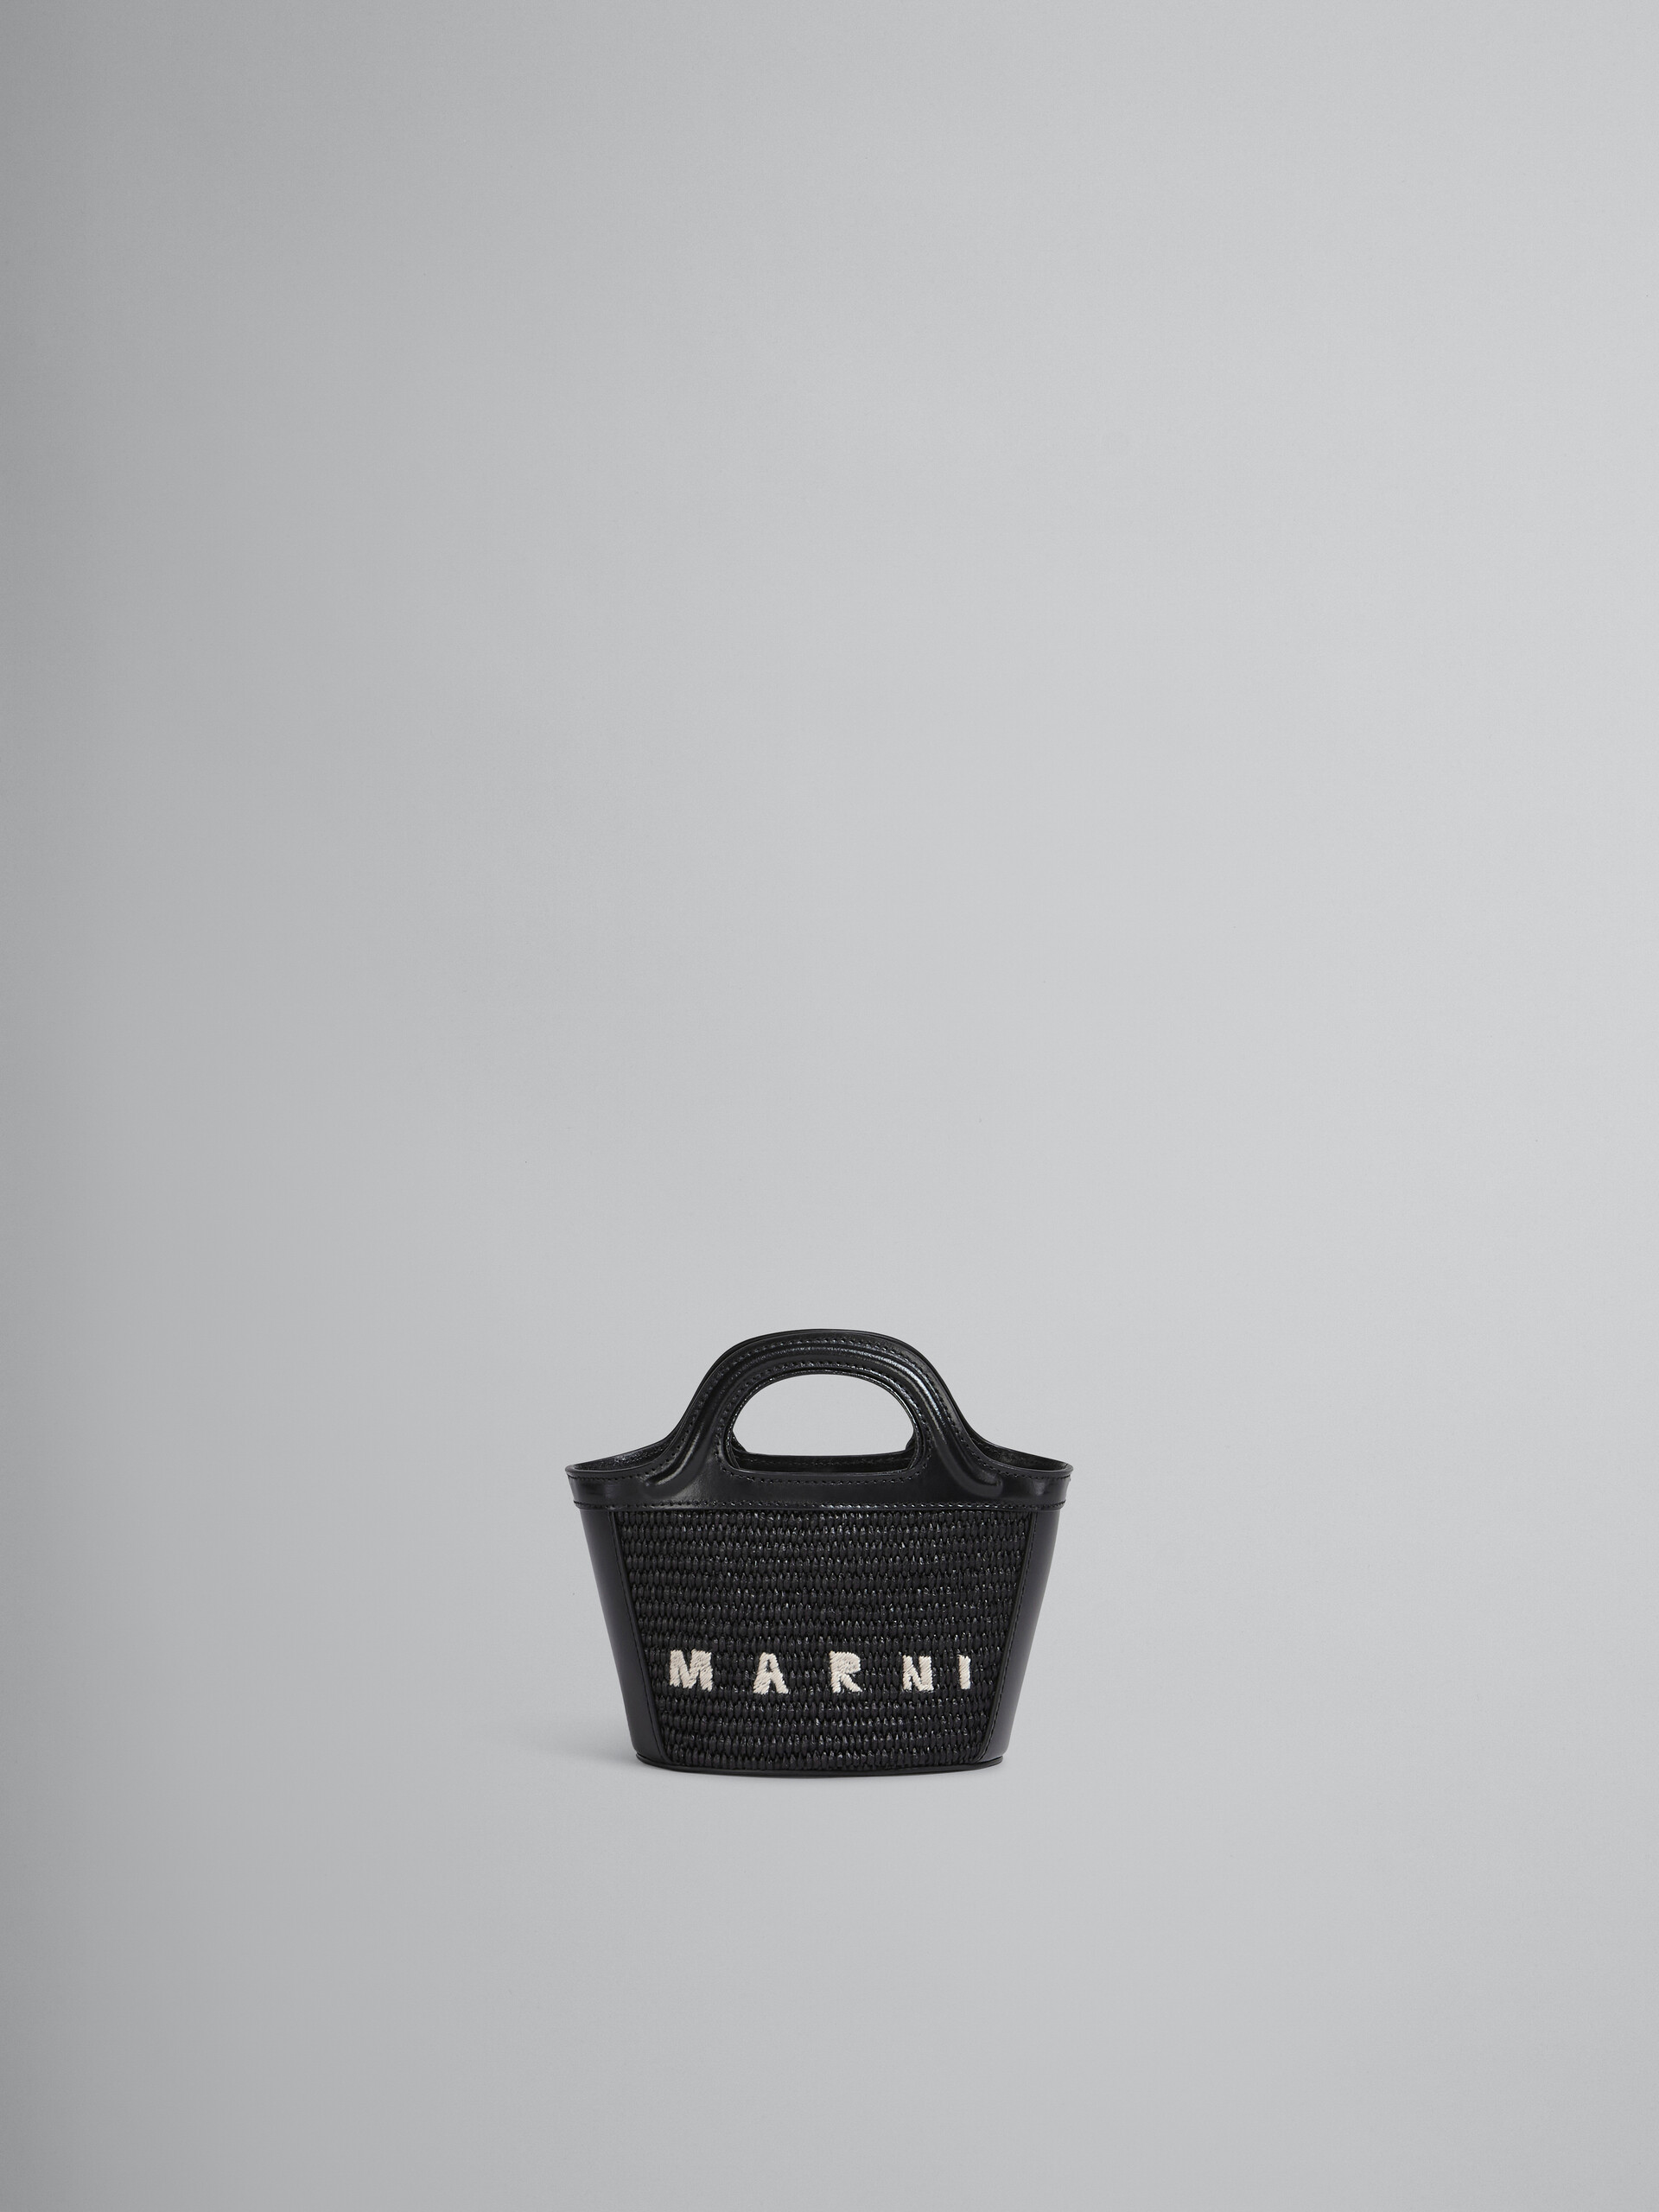 Marni Micro Tropicalia Top-handle Bag in White